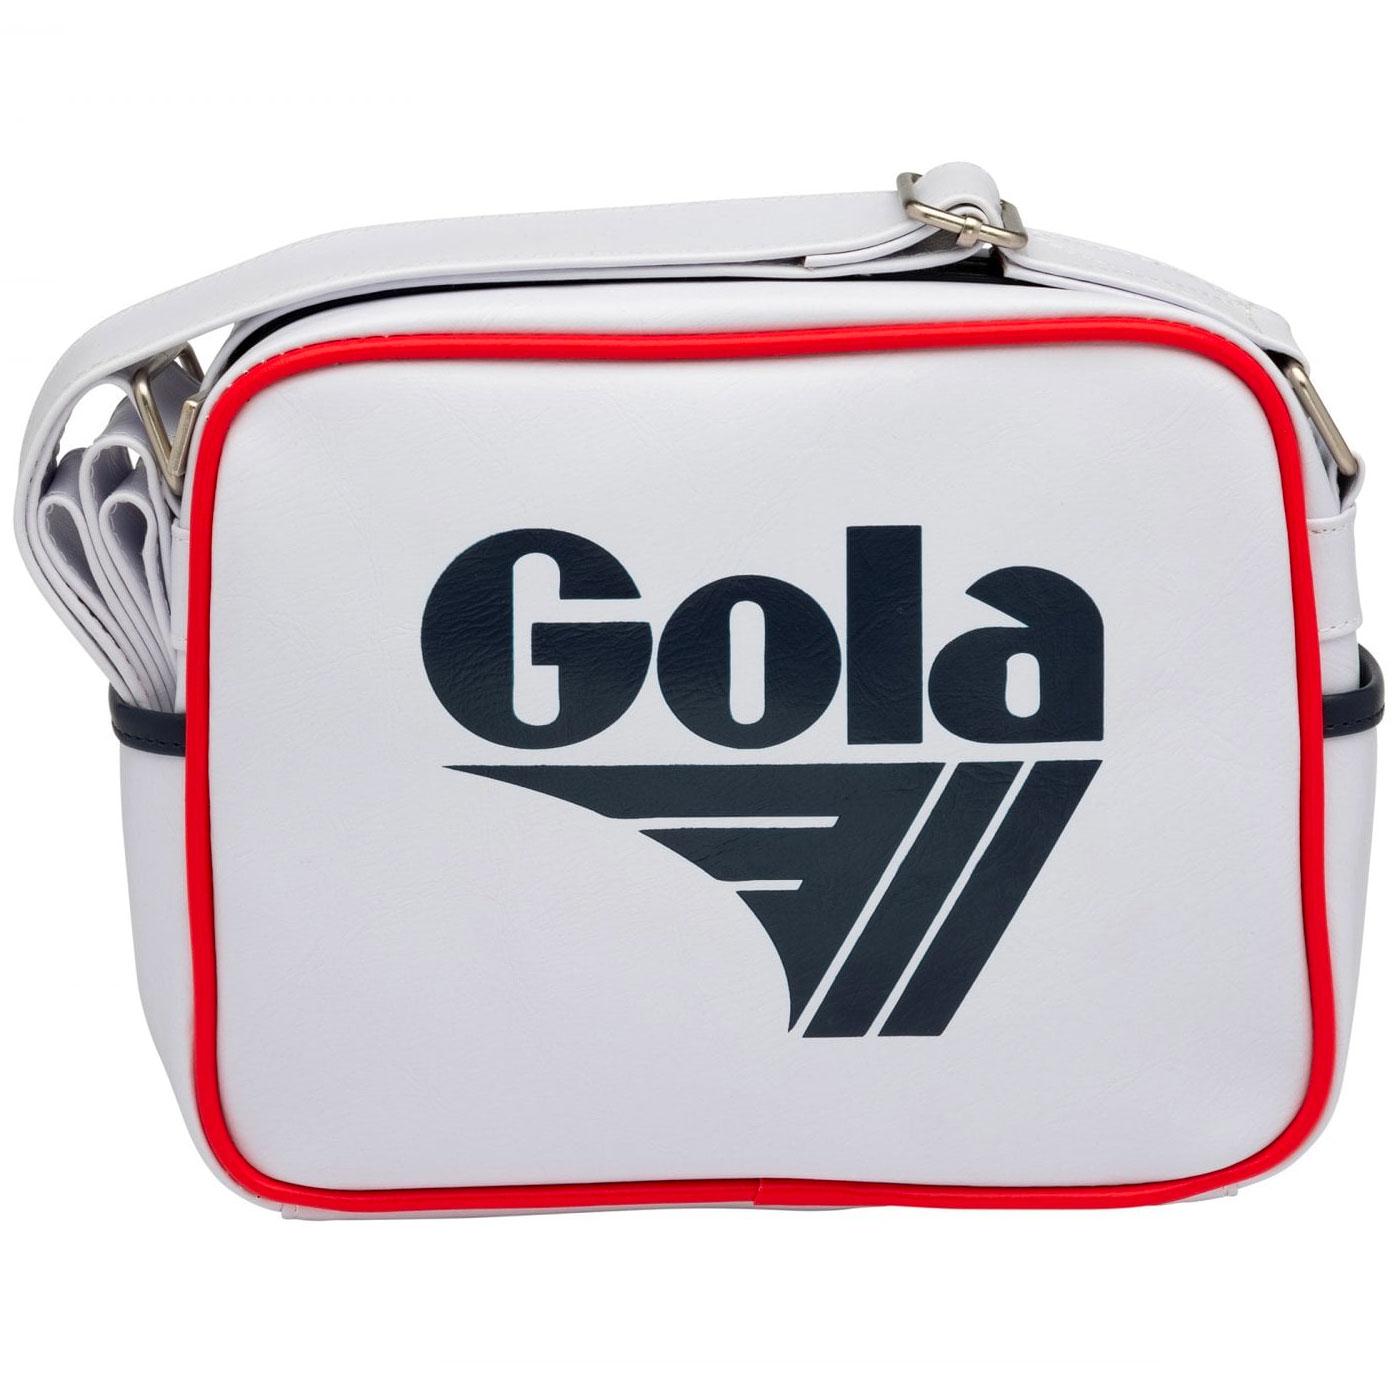 GOLA Micro Redford Retro Shoulder Bag in White